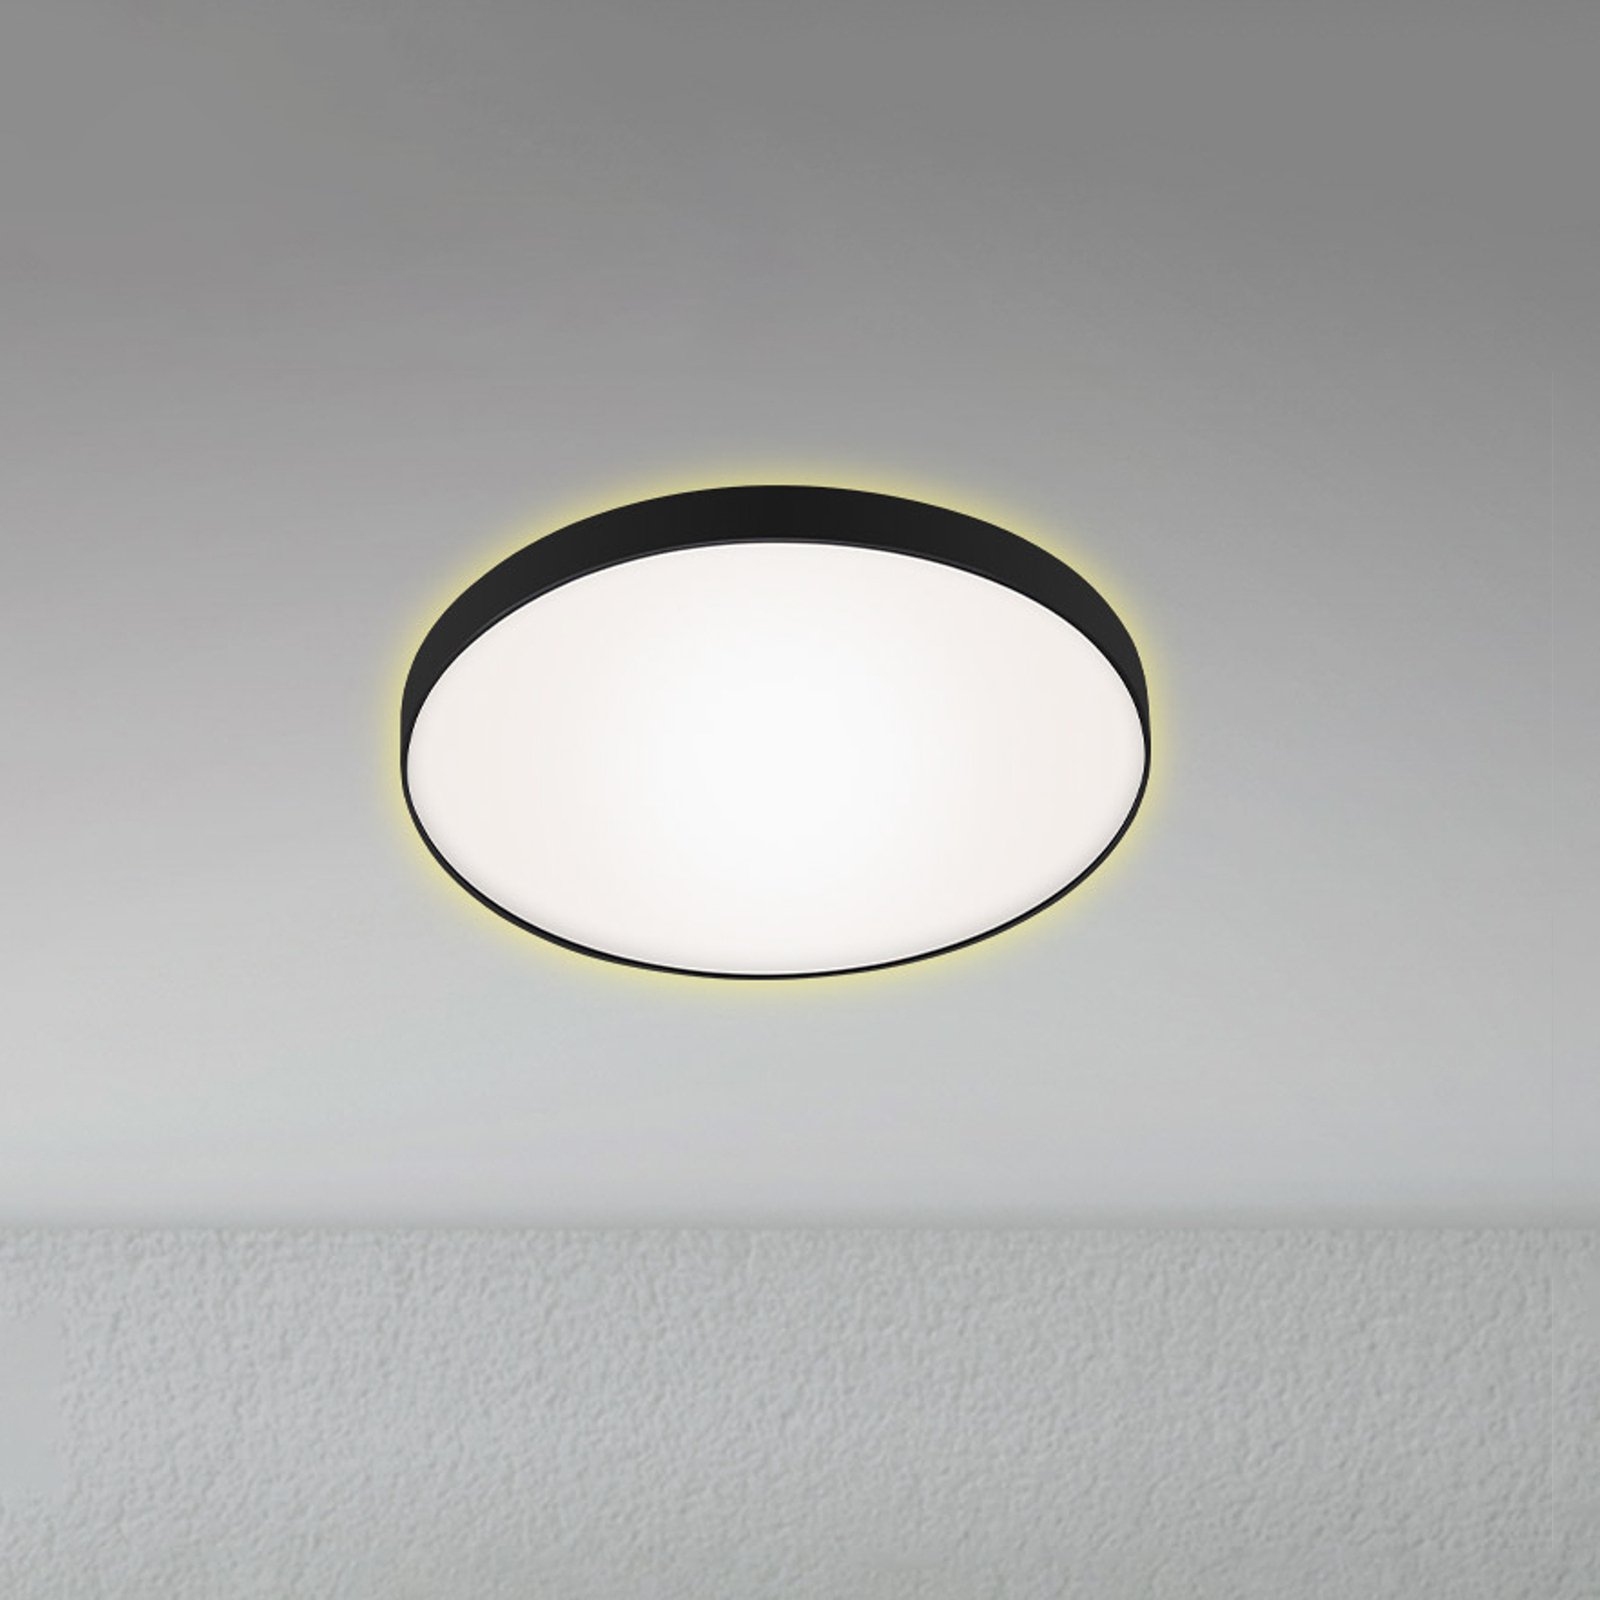 Flet LED ceiling light with backlight, 28.5 cm